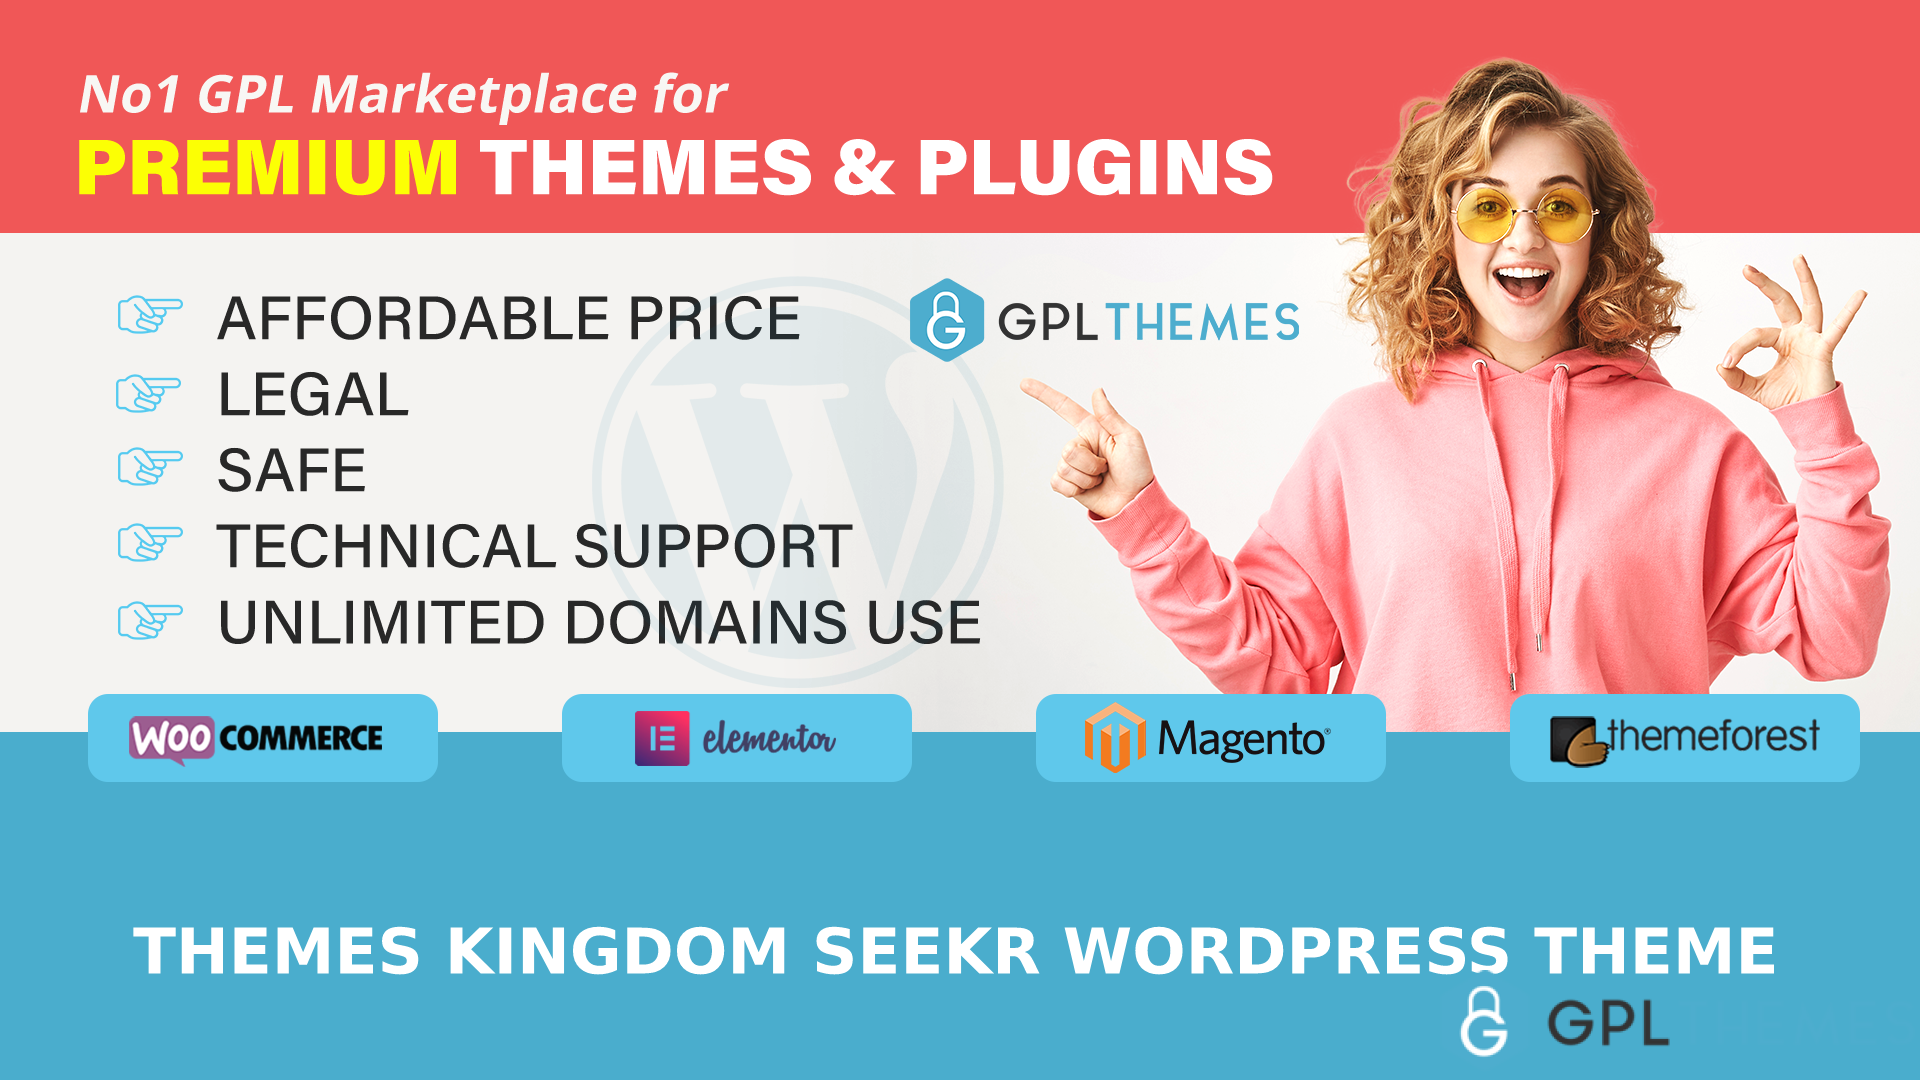 Themes Kingdom Seekr WordPress Theme